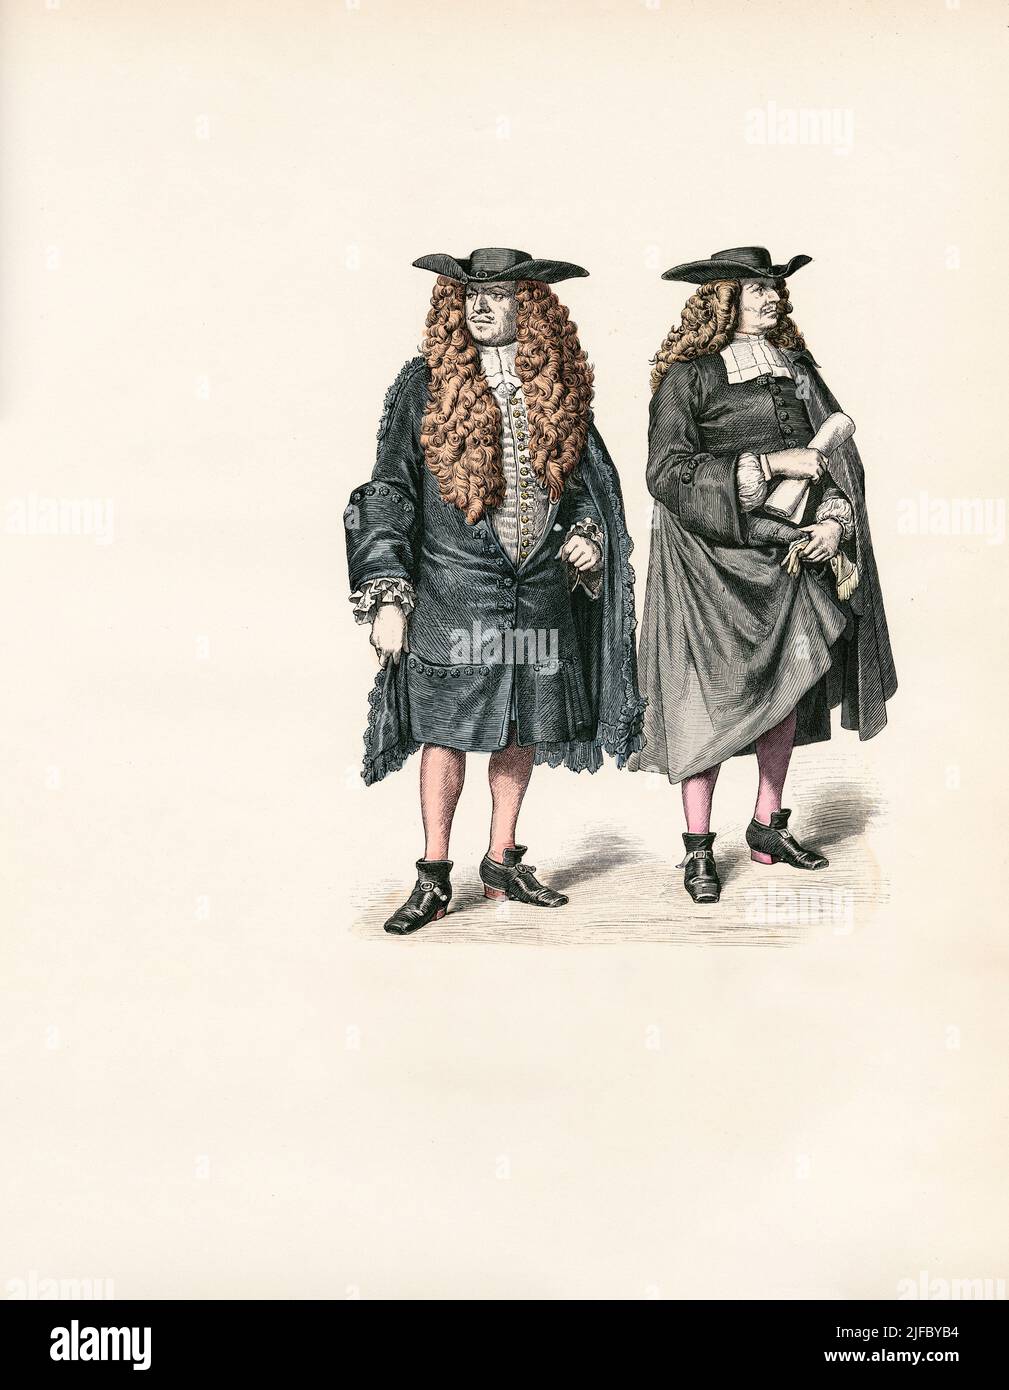 Consul, Councilman (1670), Strasbourg, 17th Century, Illustration, The History of Costume, Braun & Schneider, Munich, Germany, 1861-1880 Stock Photo